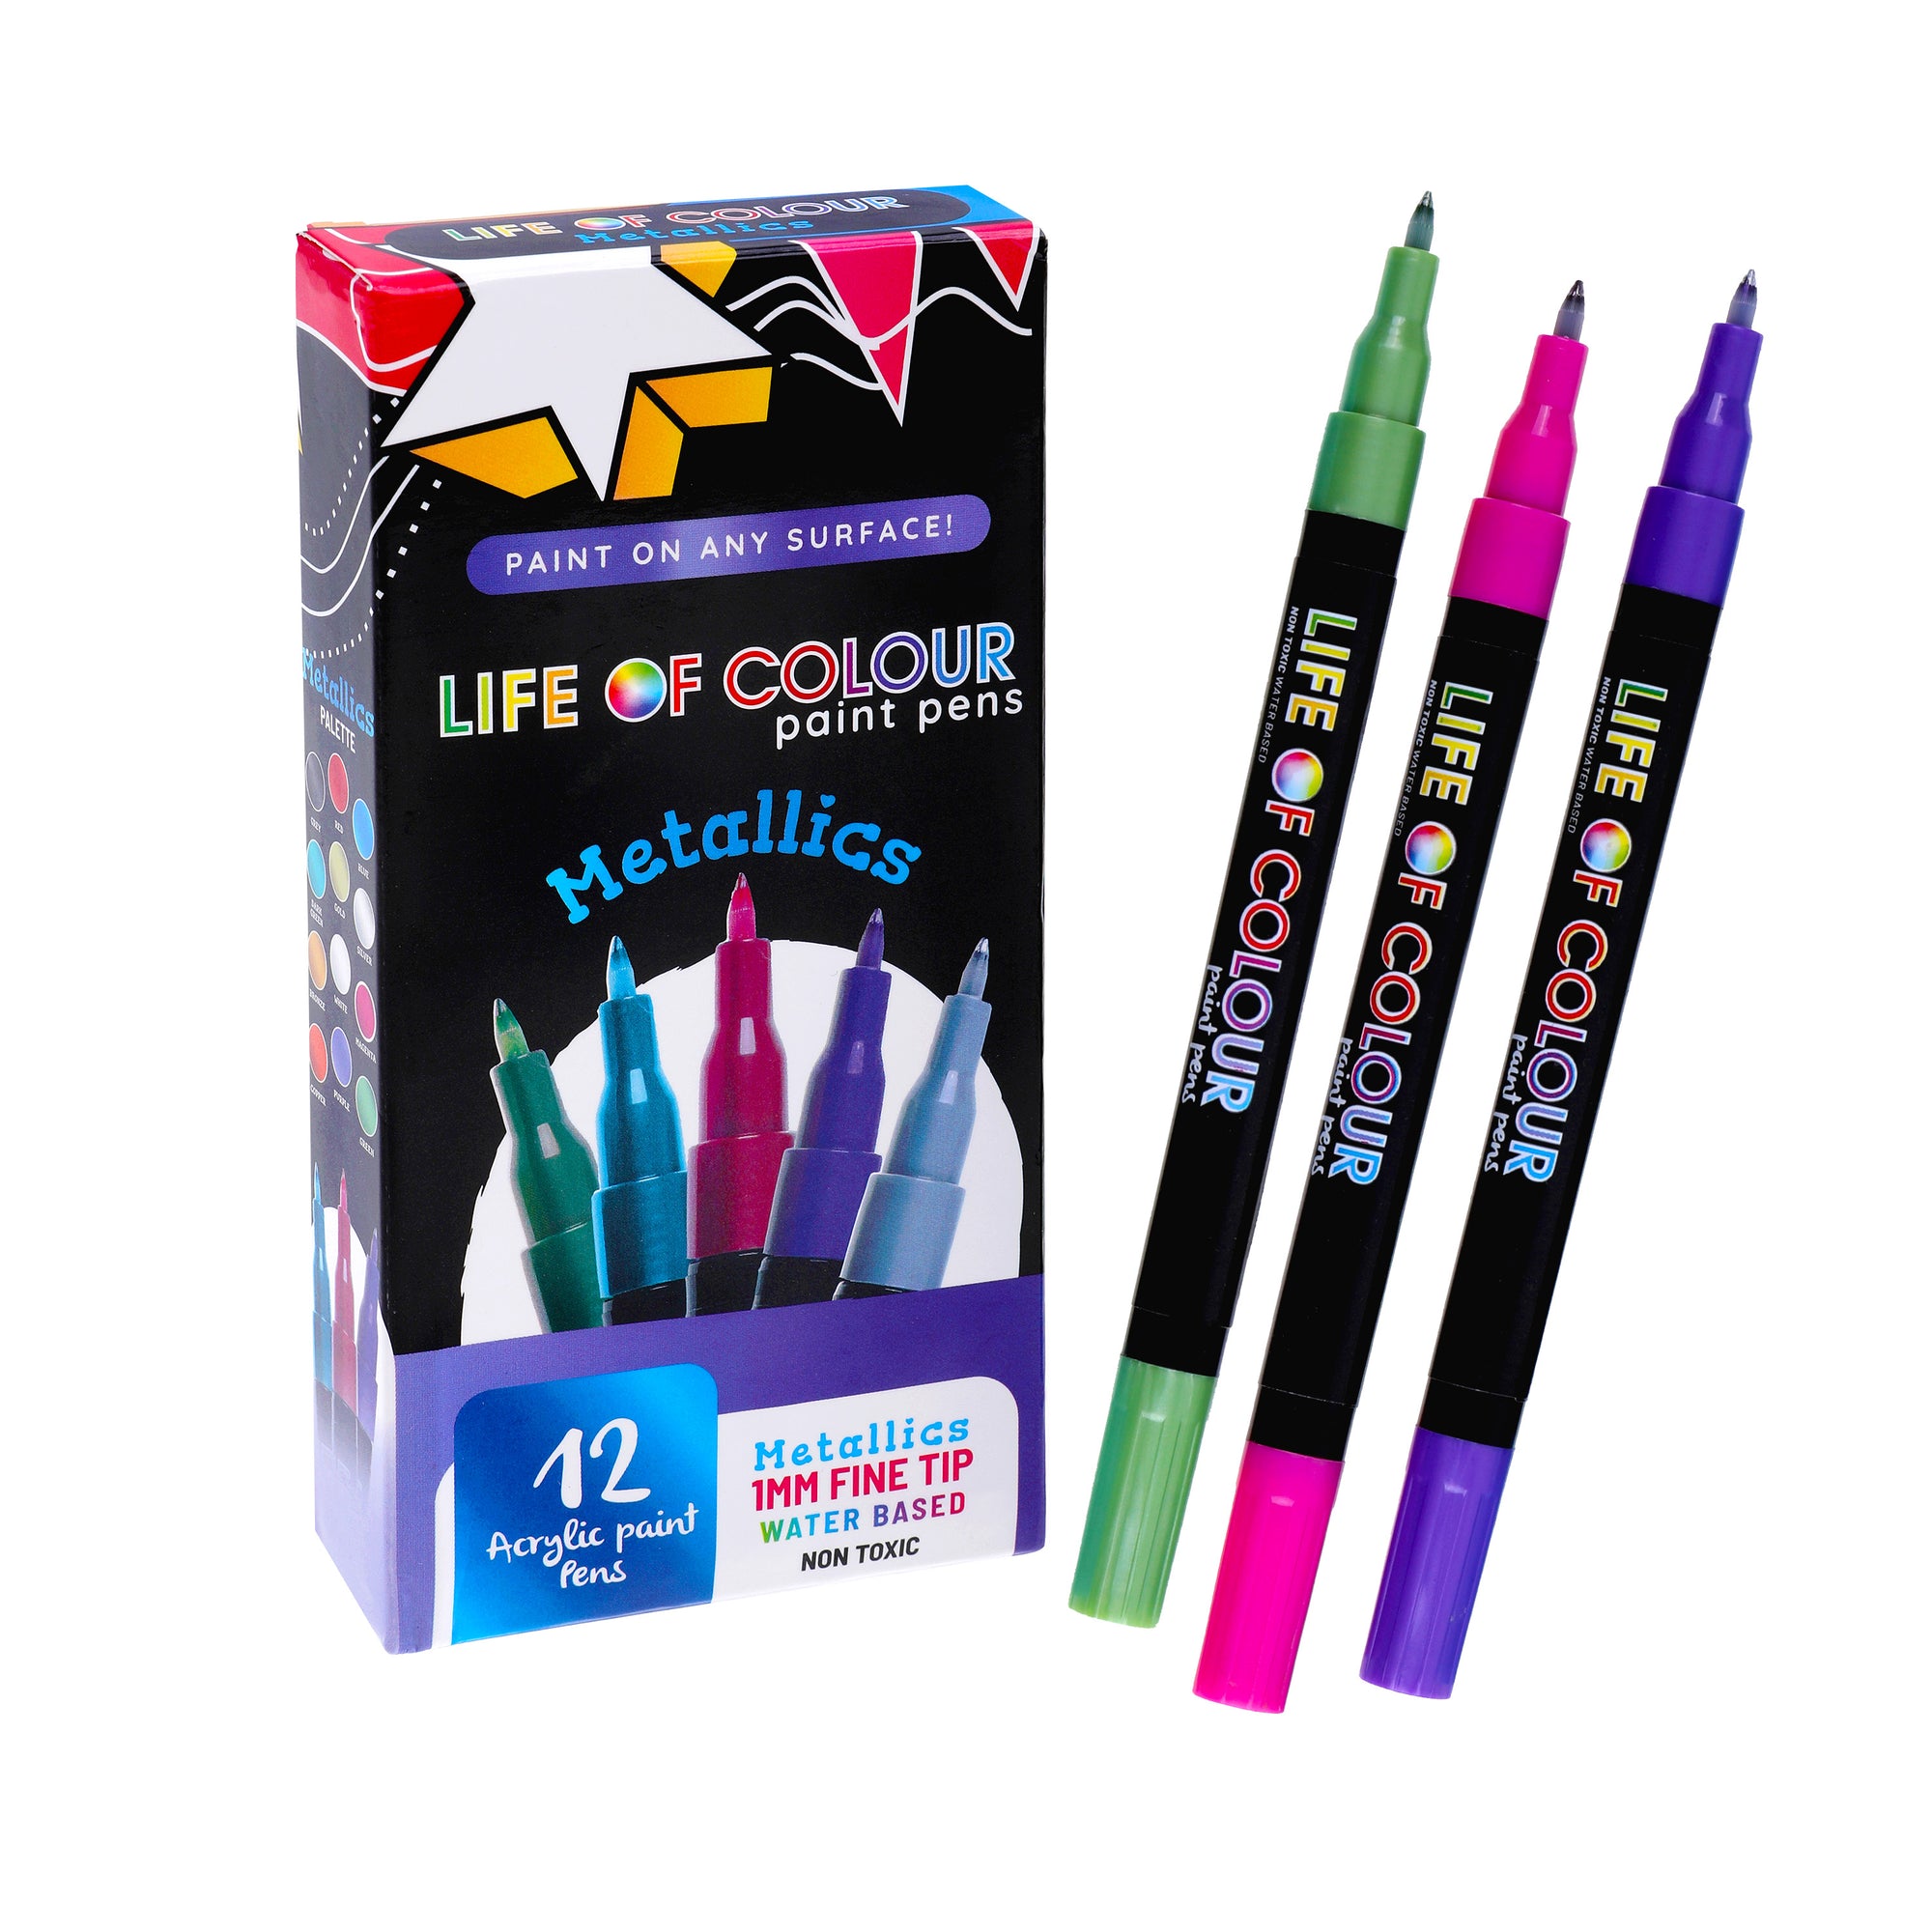 https://cdn.shopify.com/s/files/1/2374/1375/products/life-of-colour-acrylic-paint-pens_metallic-1mm_2000x.jpg?v=1619792723